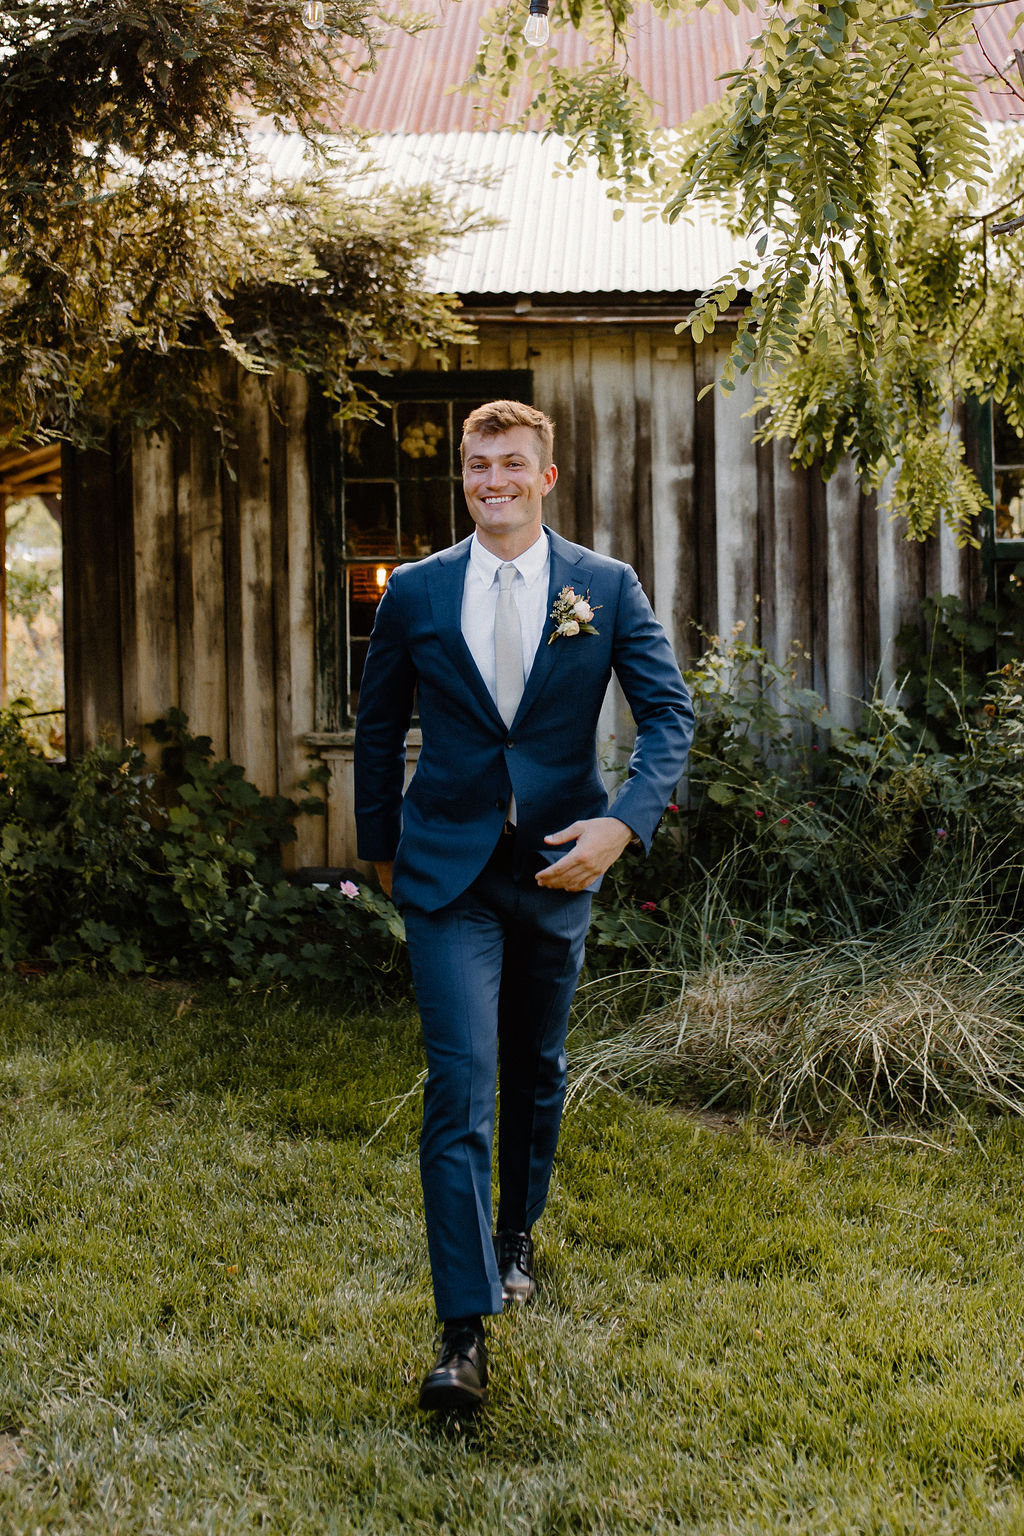 Stylish groom in slim navy suit 